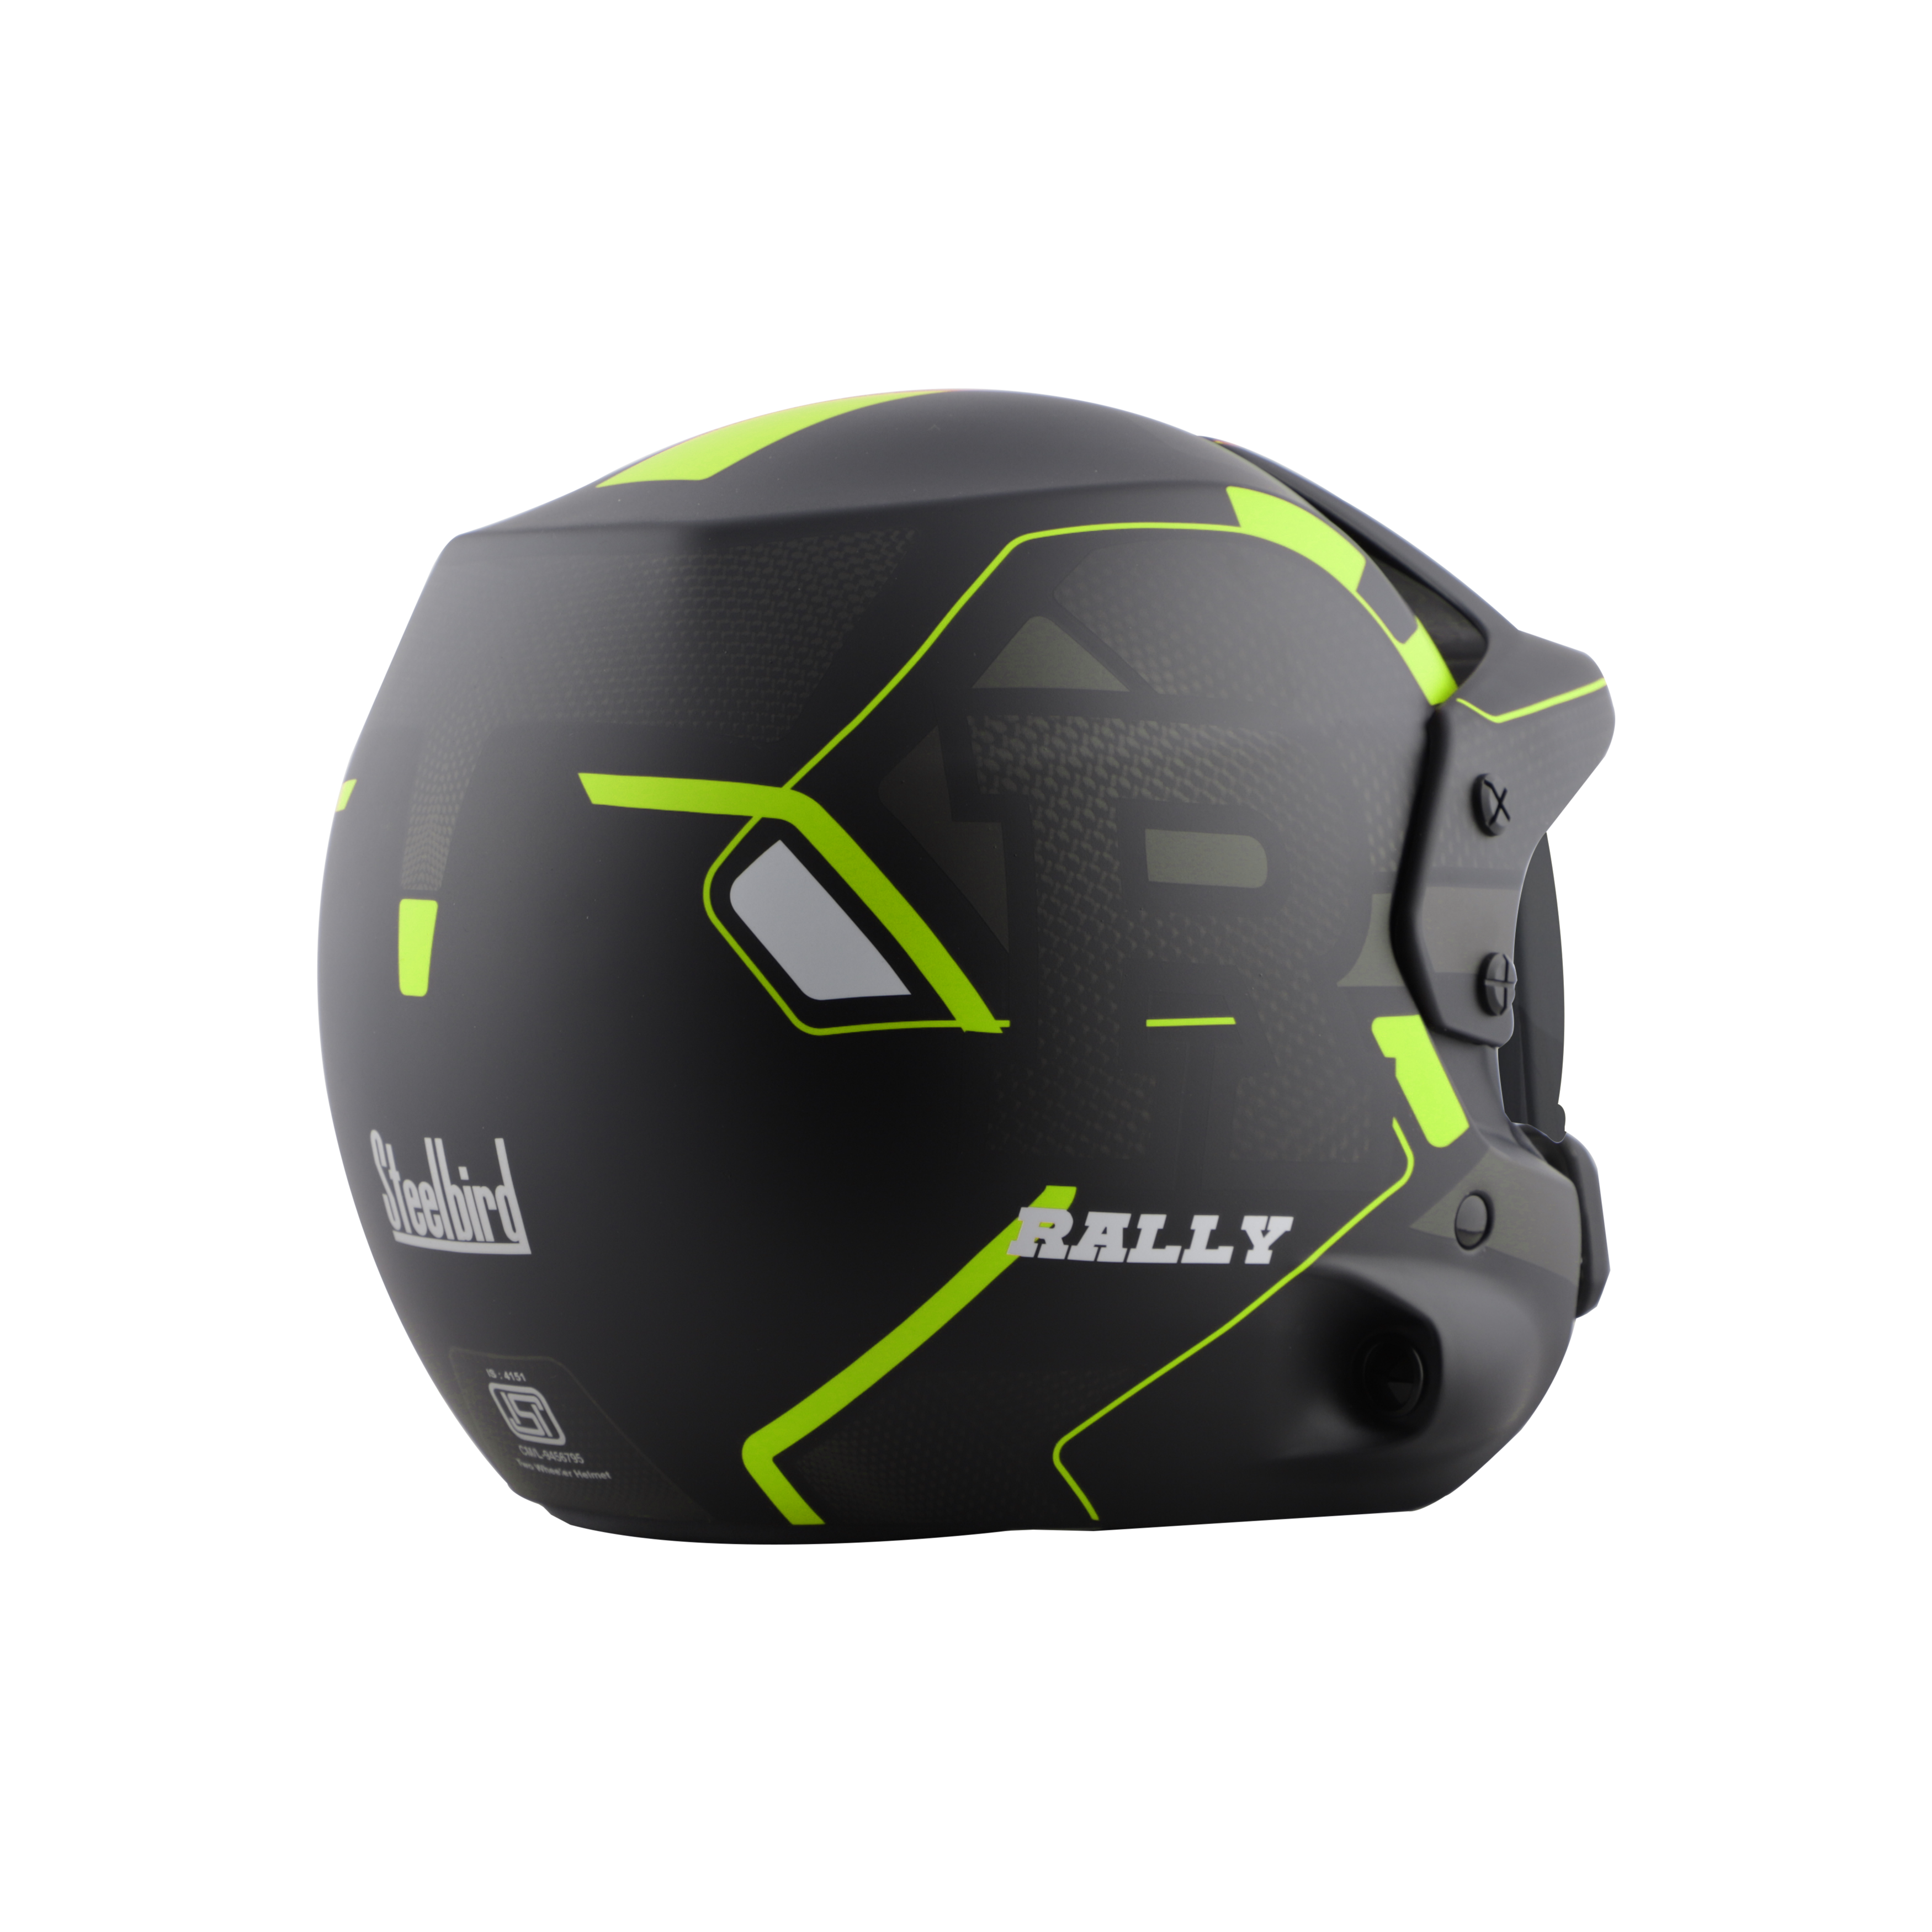 Steelbird 7Wings Rally Beat Open Face ISI Certified Off Road Helmet (Matt Black Neon With Smoke Visor)